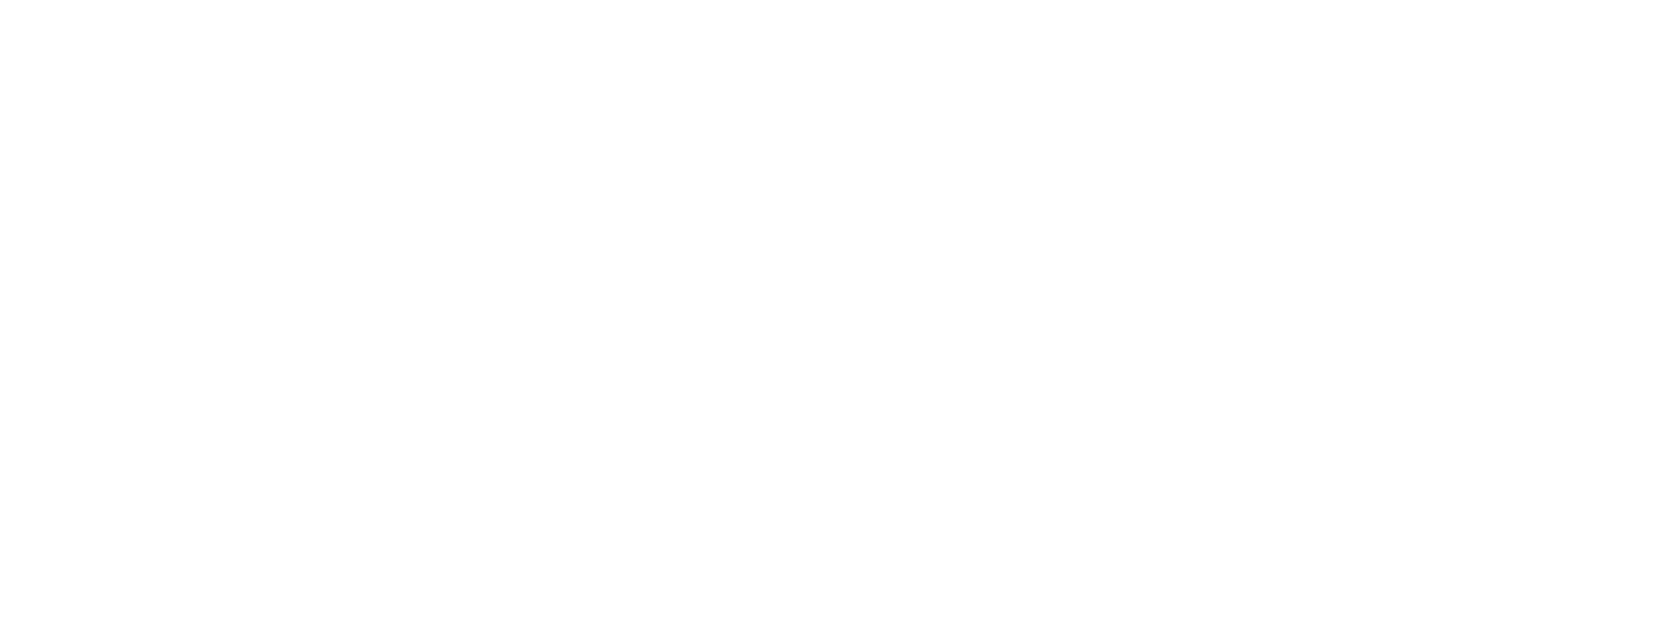 Universidad Mayor Ingenieria Civil Industrial